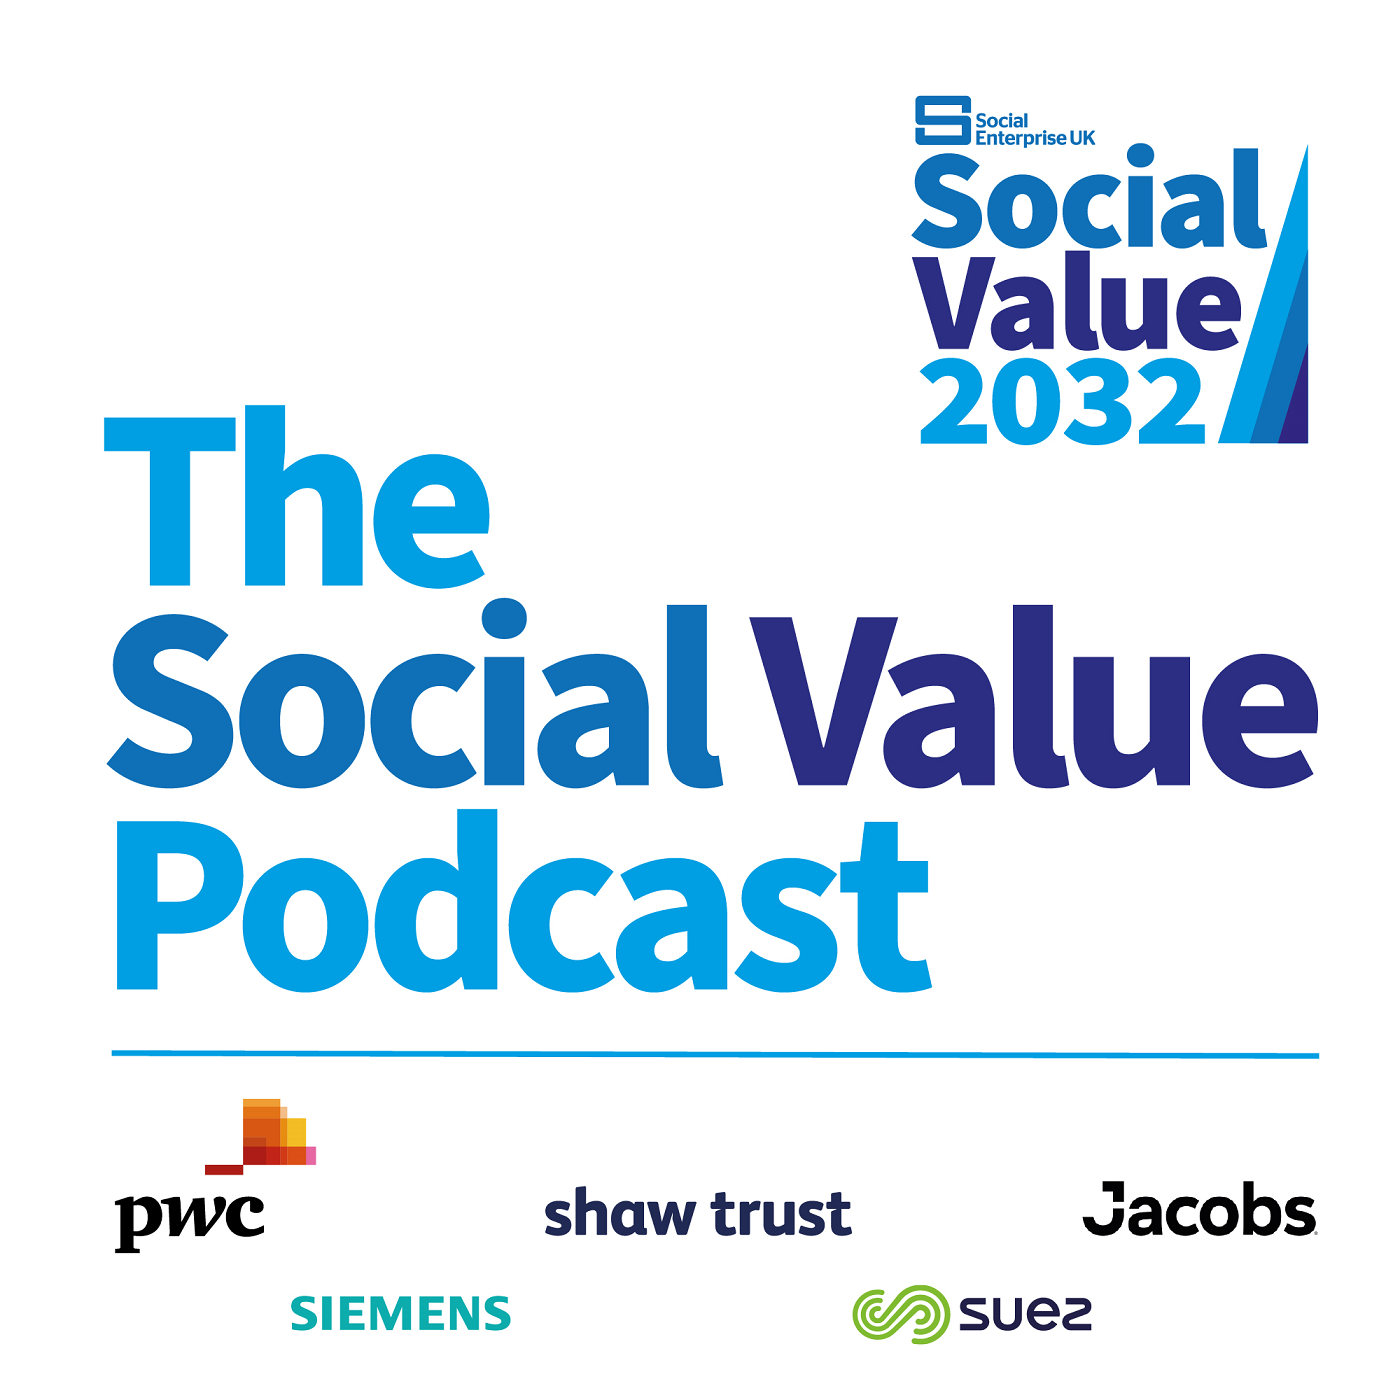 The Social Value Podcast logo